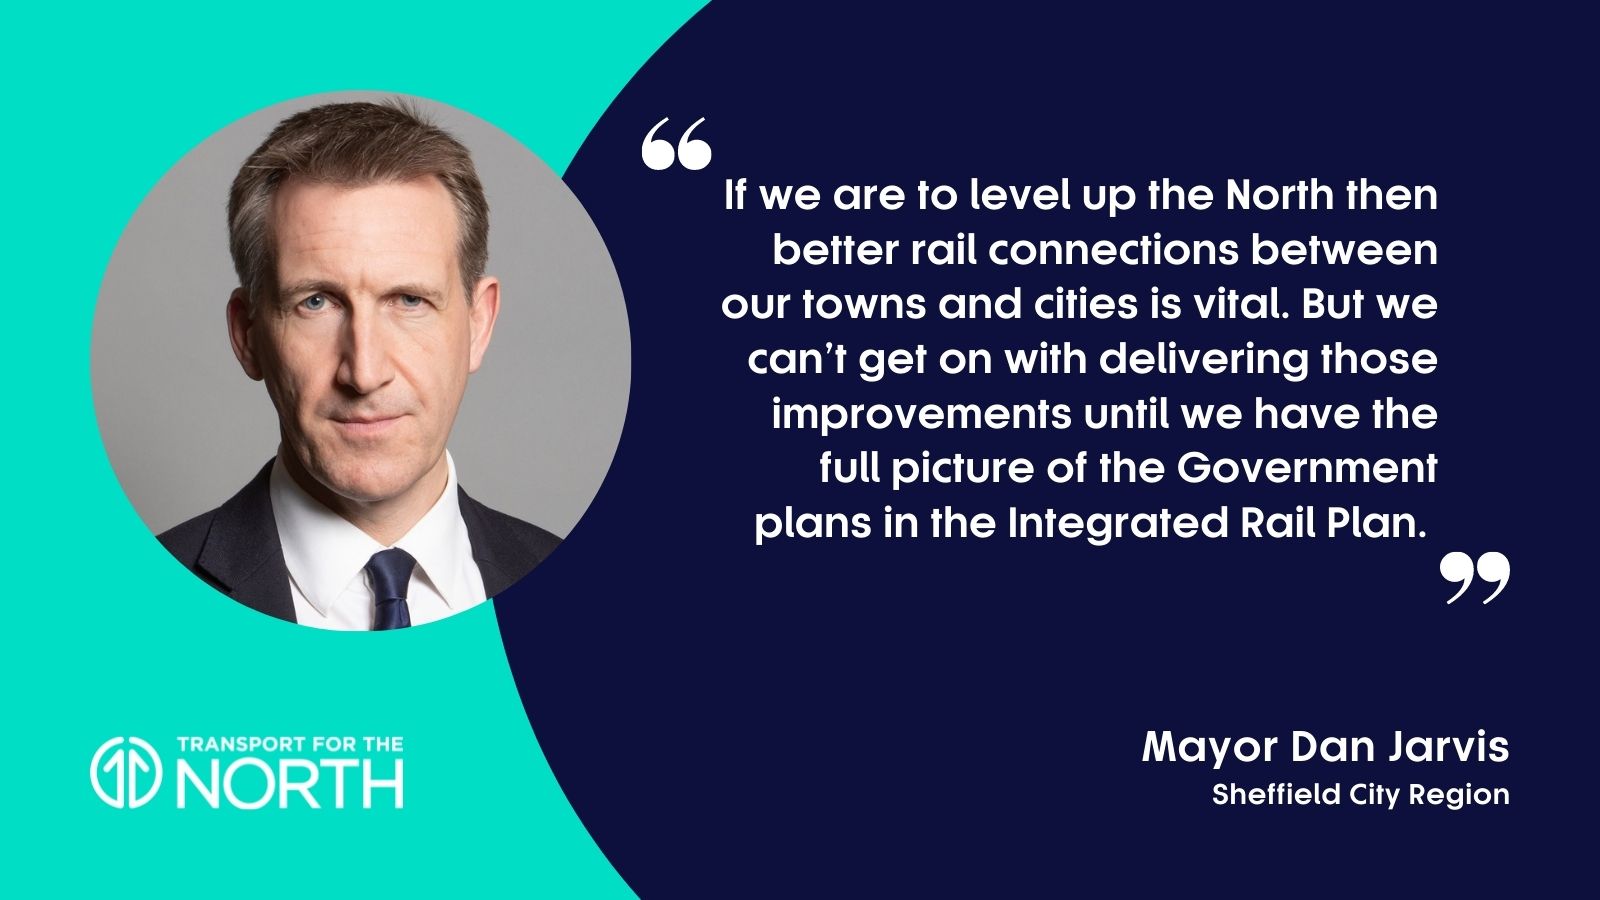 Sheffield City Region Mayor Dan Jarvis on the Integrated Rail Plan